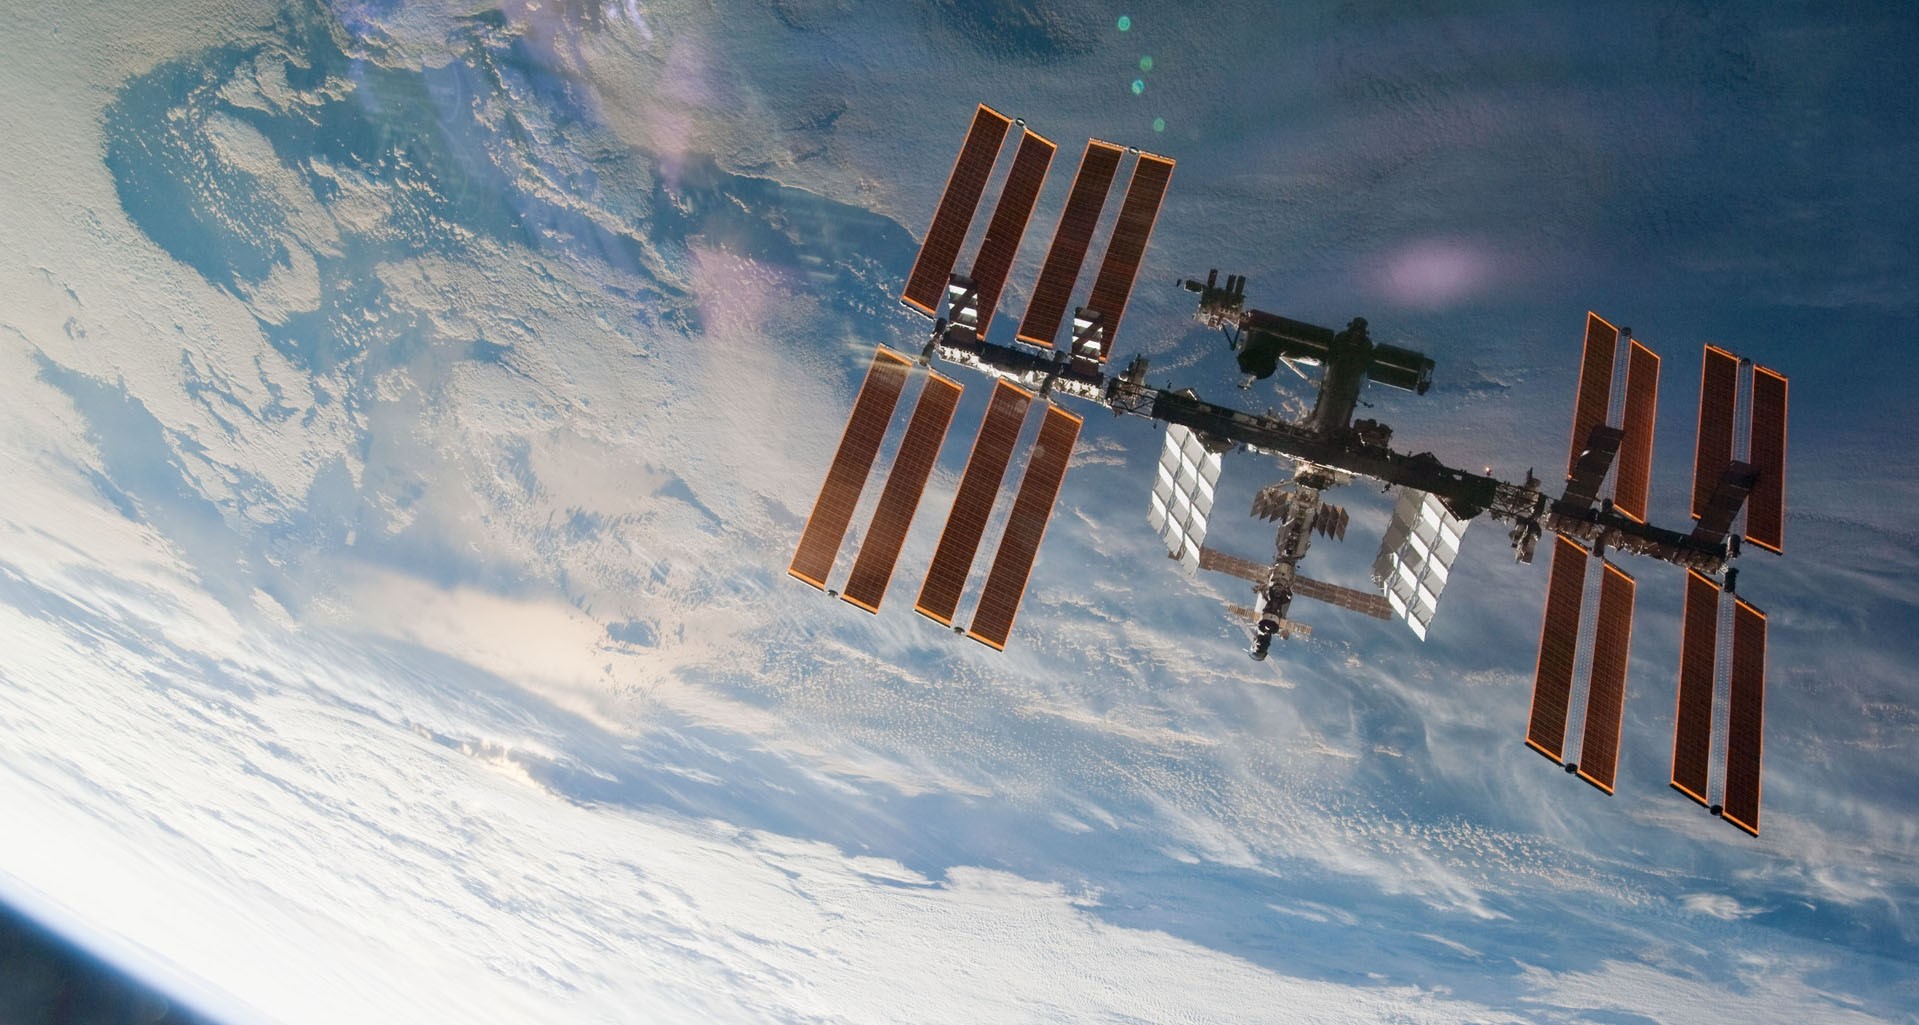 «Space Hero»: Το πρωτοποριακό ριάλιτι που δίνει έπαθλο… ταξίδι στον Διεθνή Διαστημικό Σταθμό